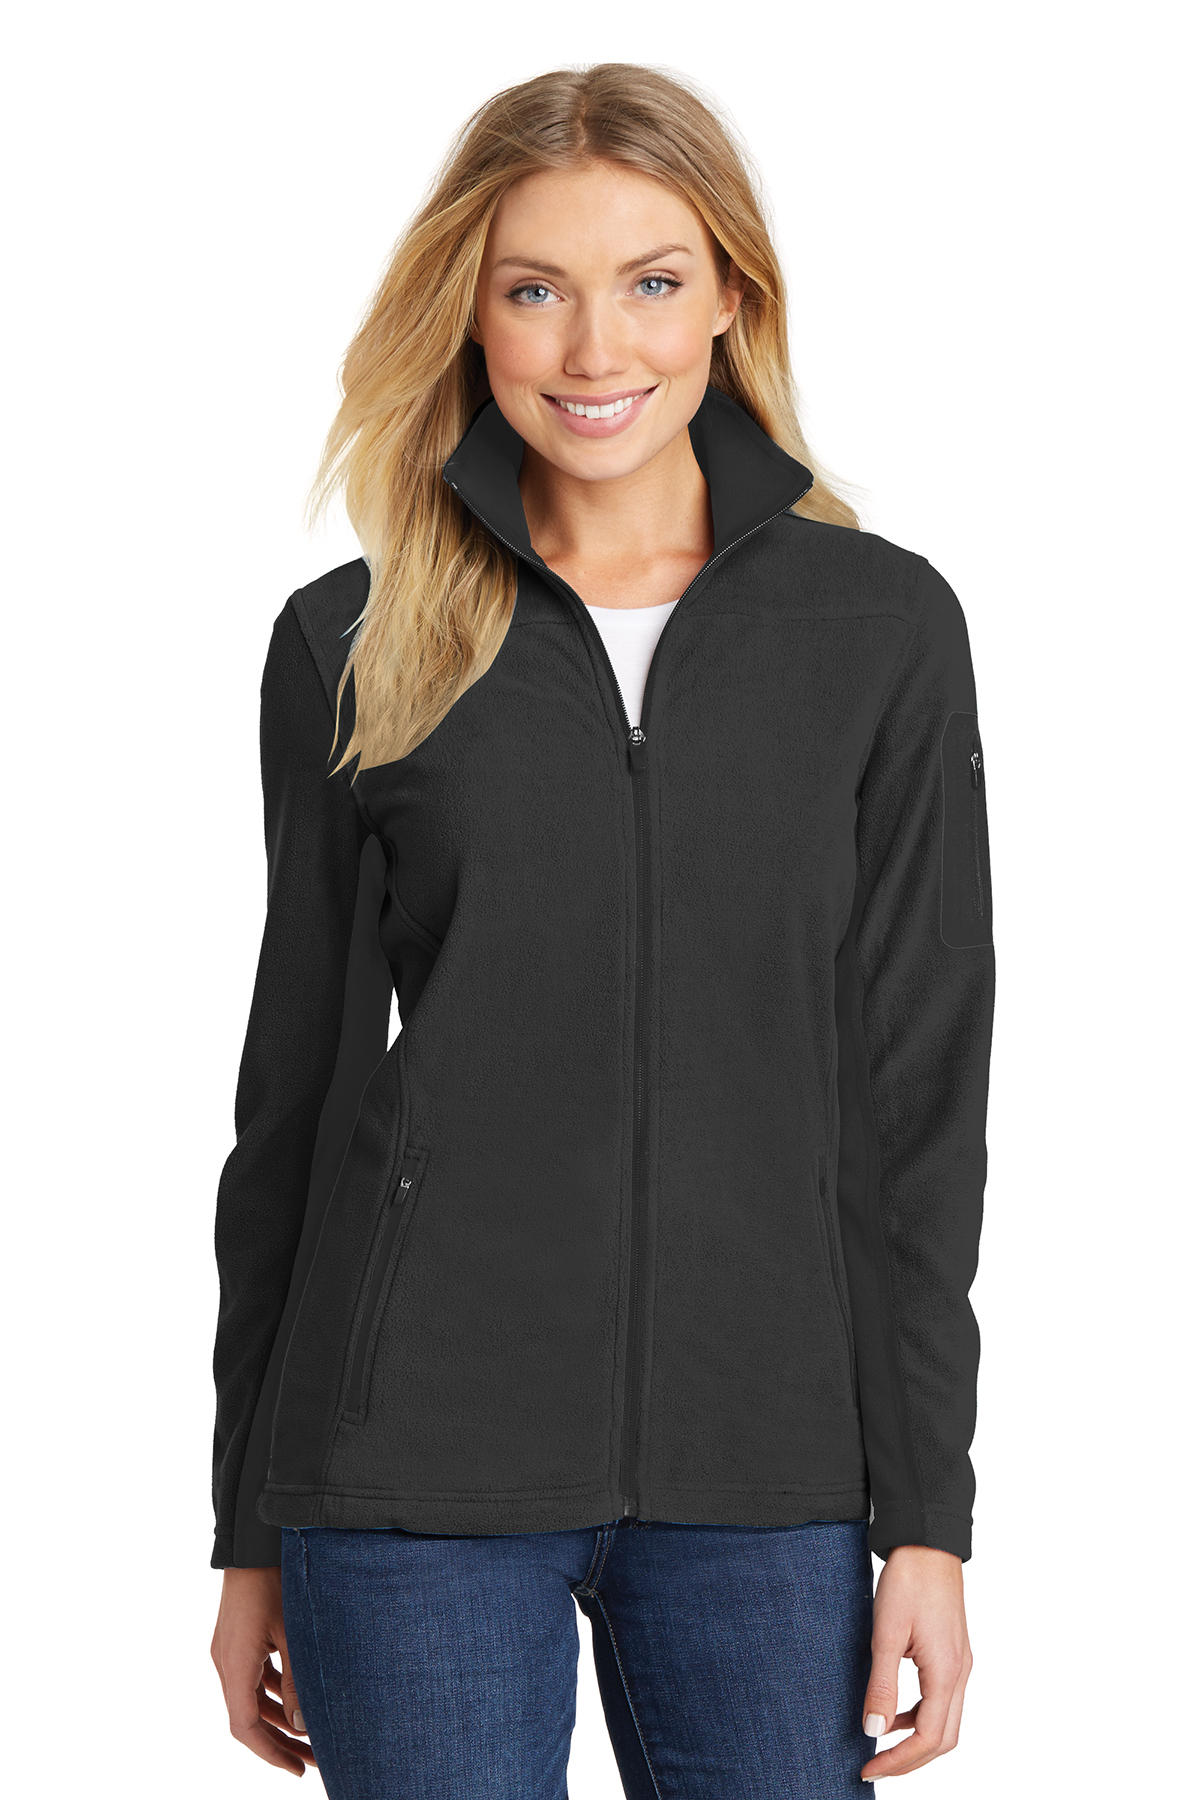 L233 Port Authority® Ladies Summit Fleece Full-Zip JacketTrophy Trolley